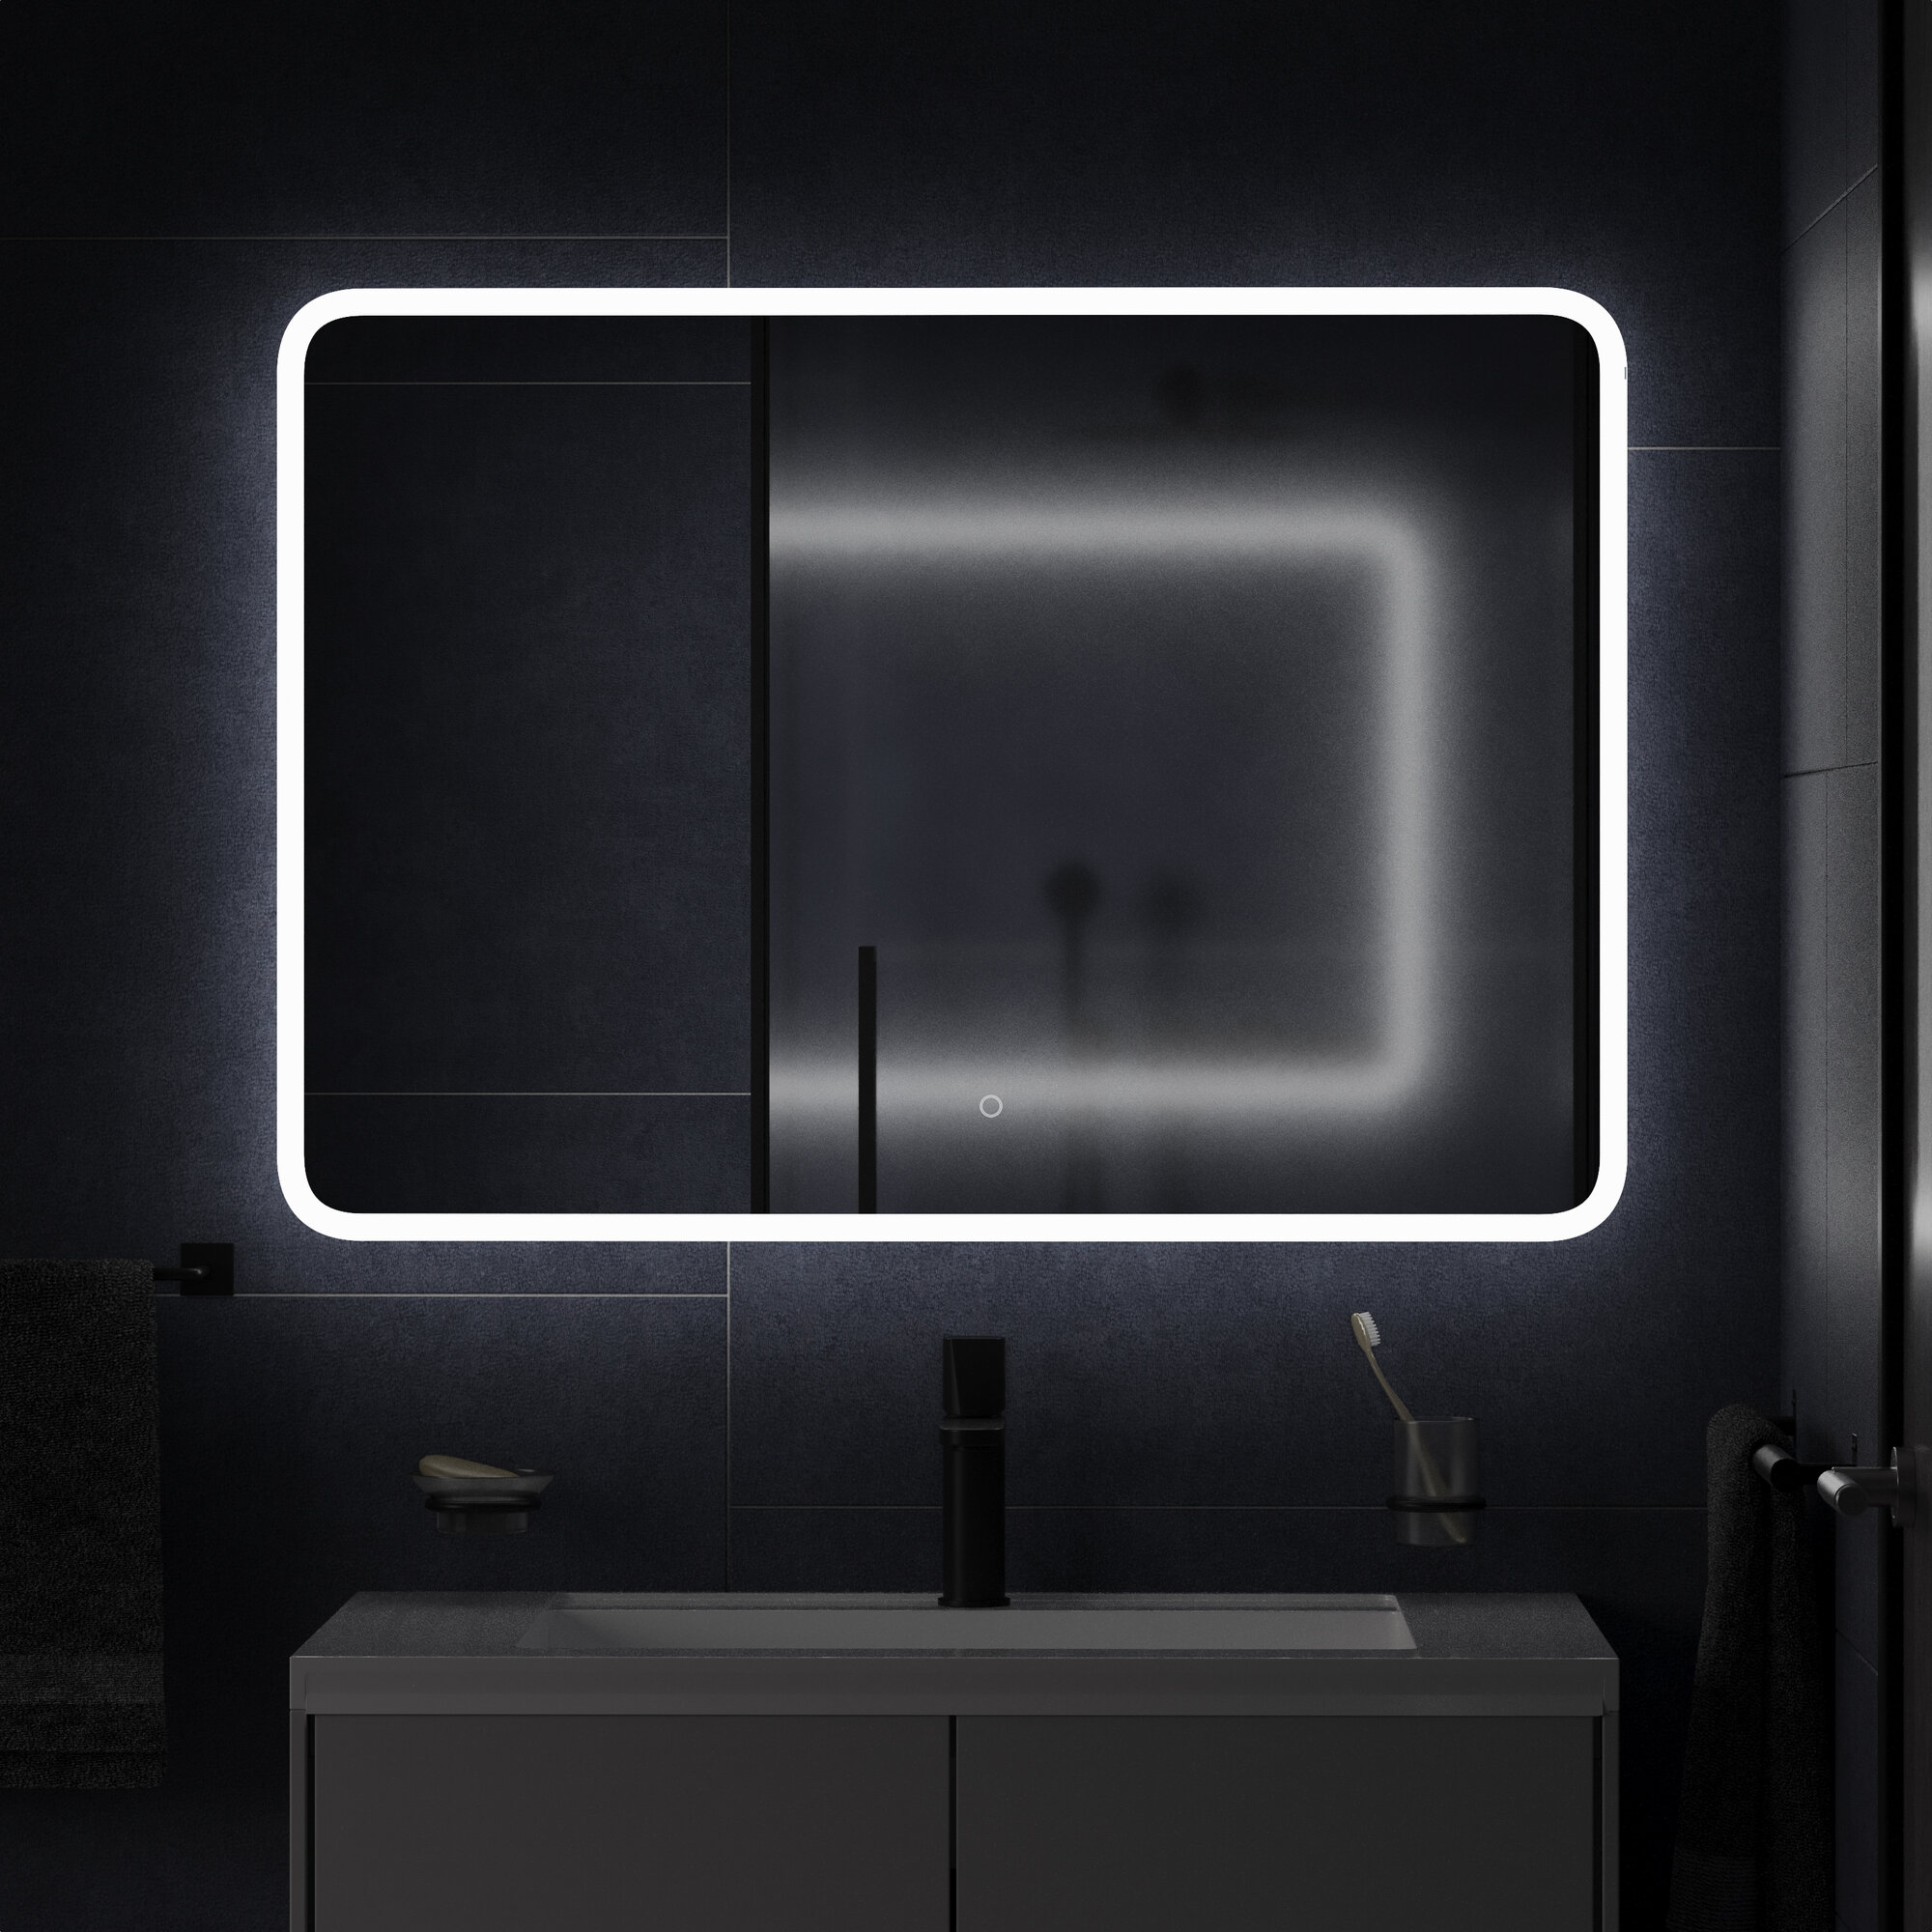 Зеркало для ванной комнаты Homsly, 100*70 см с подсветкой, коллекция Askilo, 6H-004-10LE-ASK